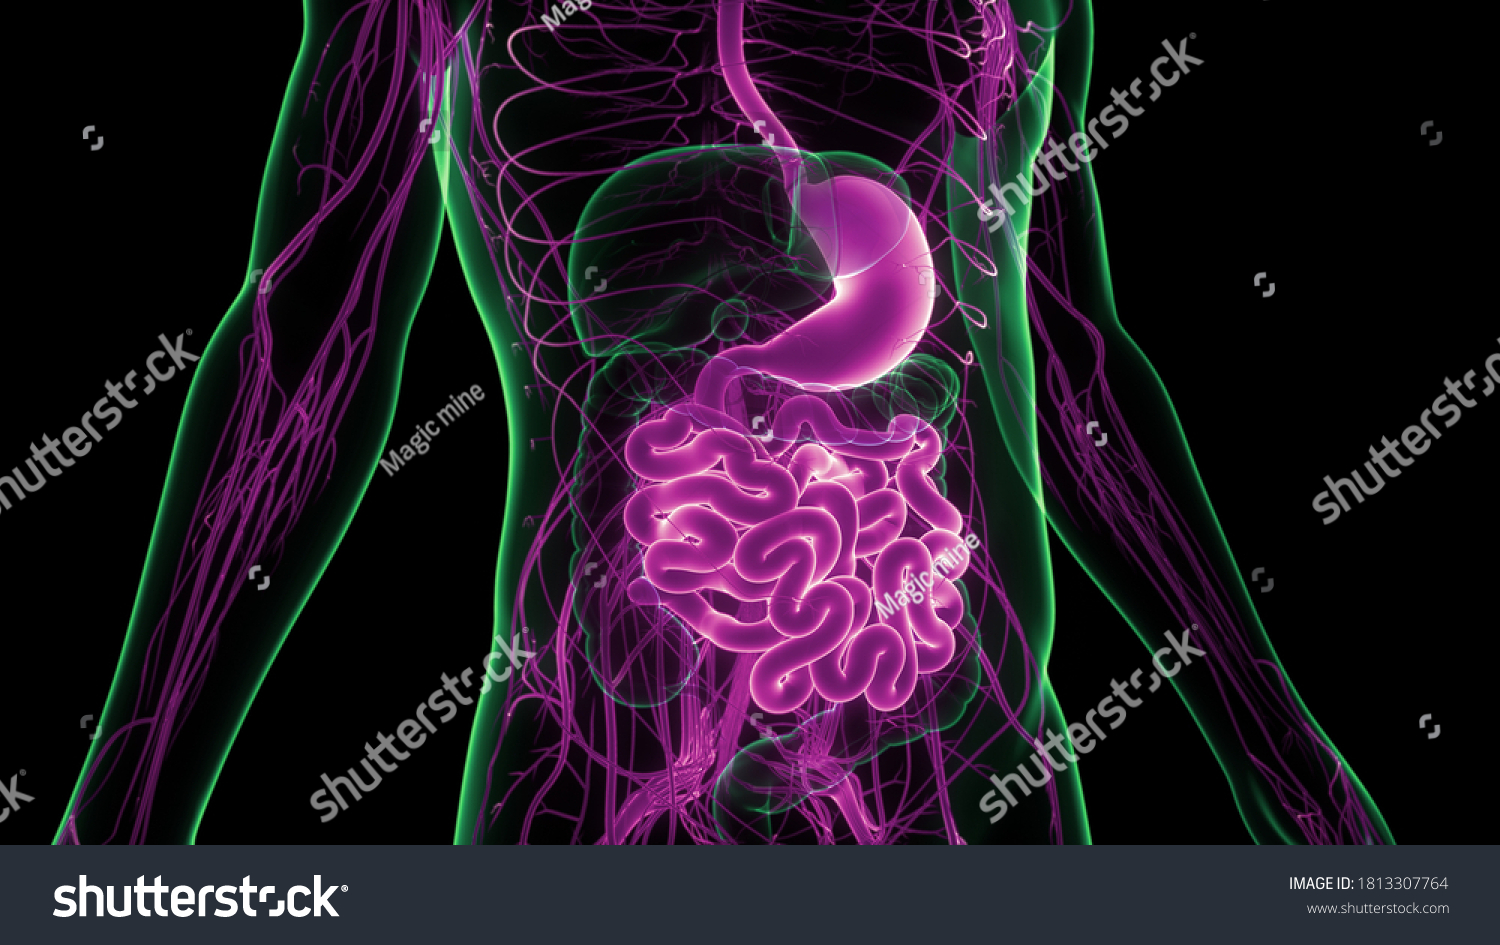 Human Digestive System Stomach Small Intestine Stock Illustration 1813307764 Shutterstock